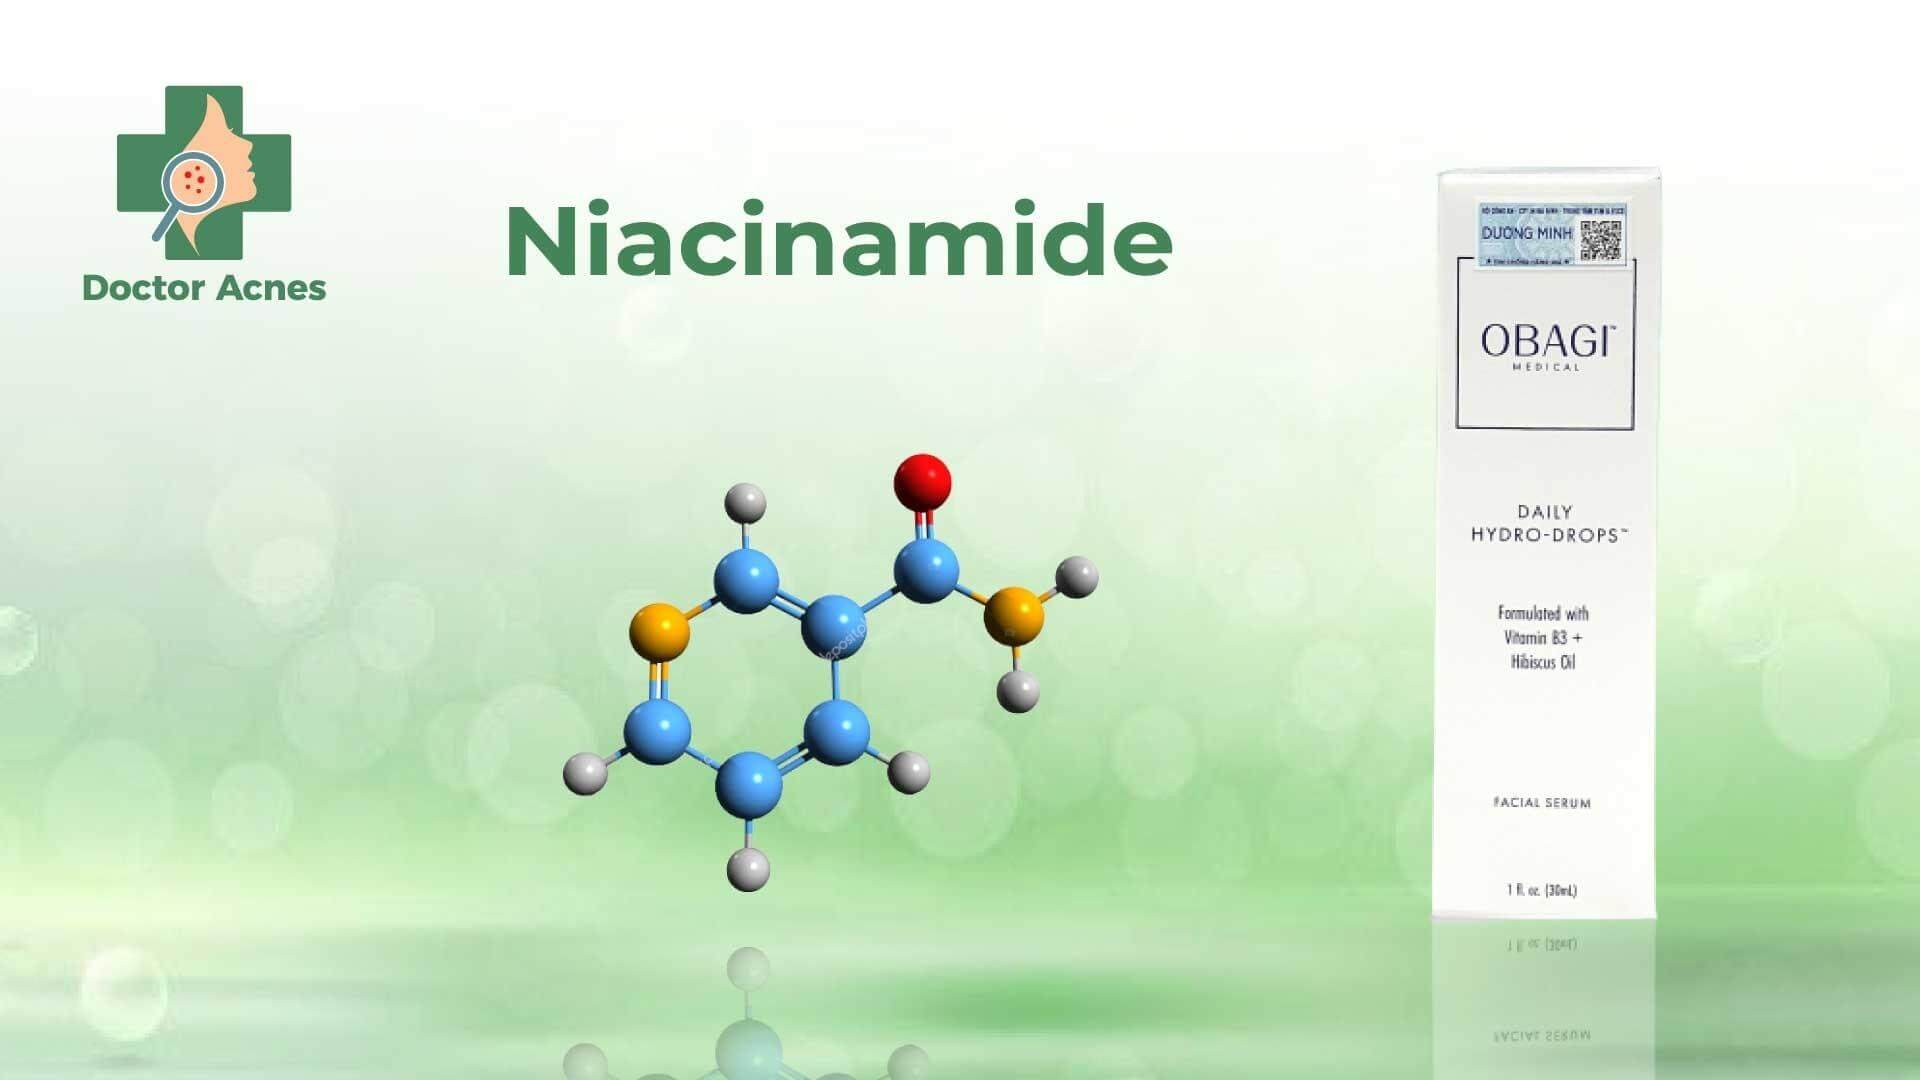 Niacinamide - Doctor Acnes